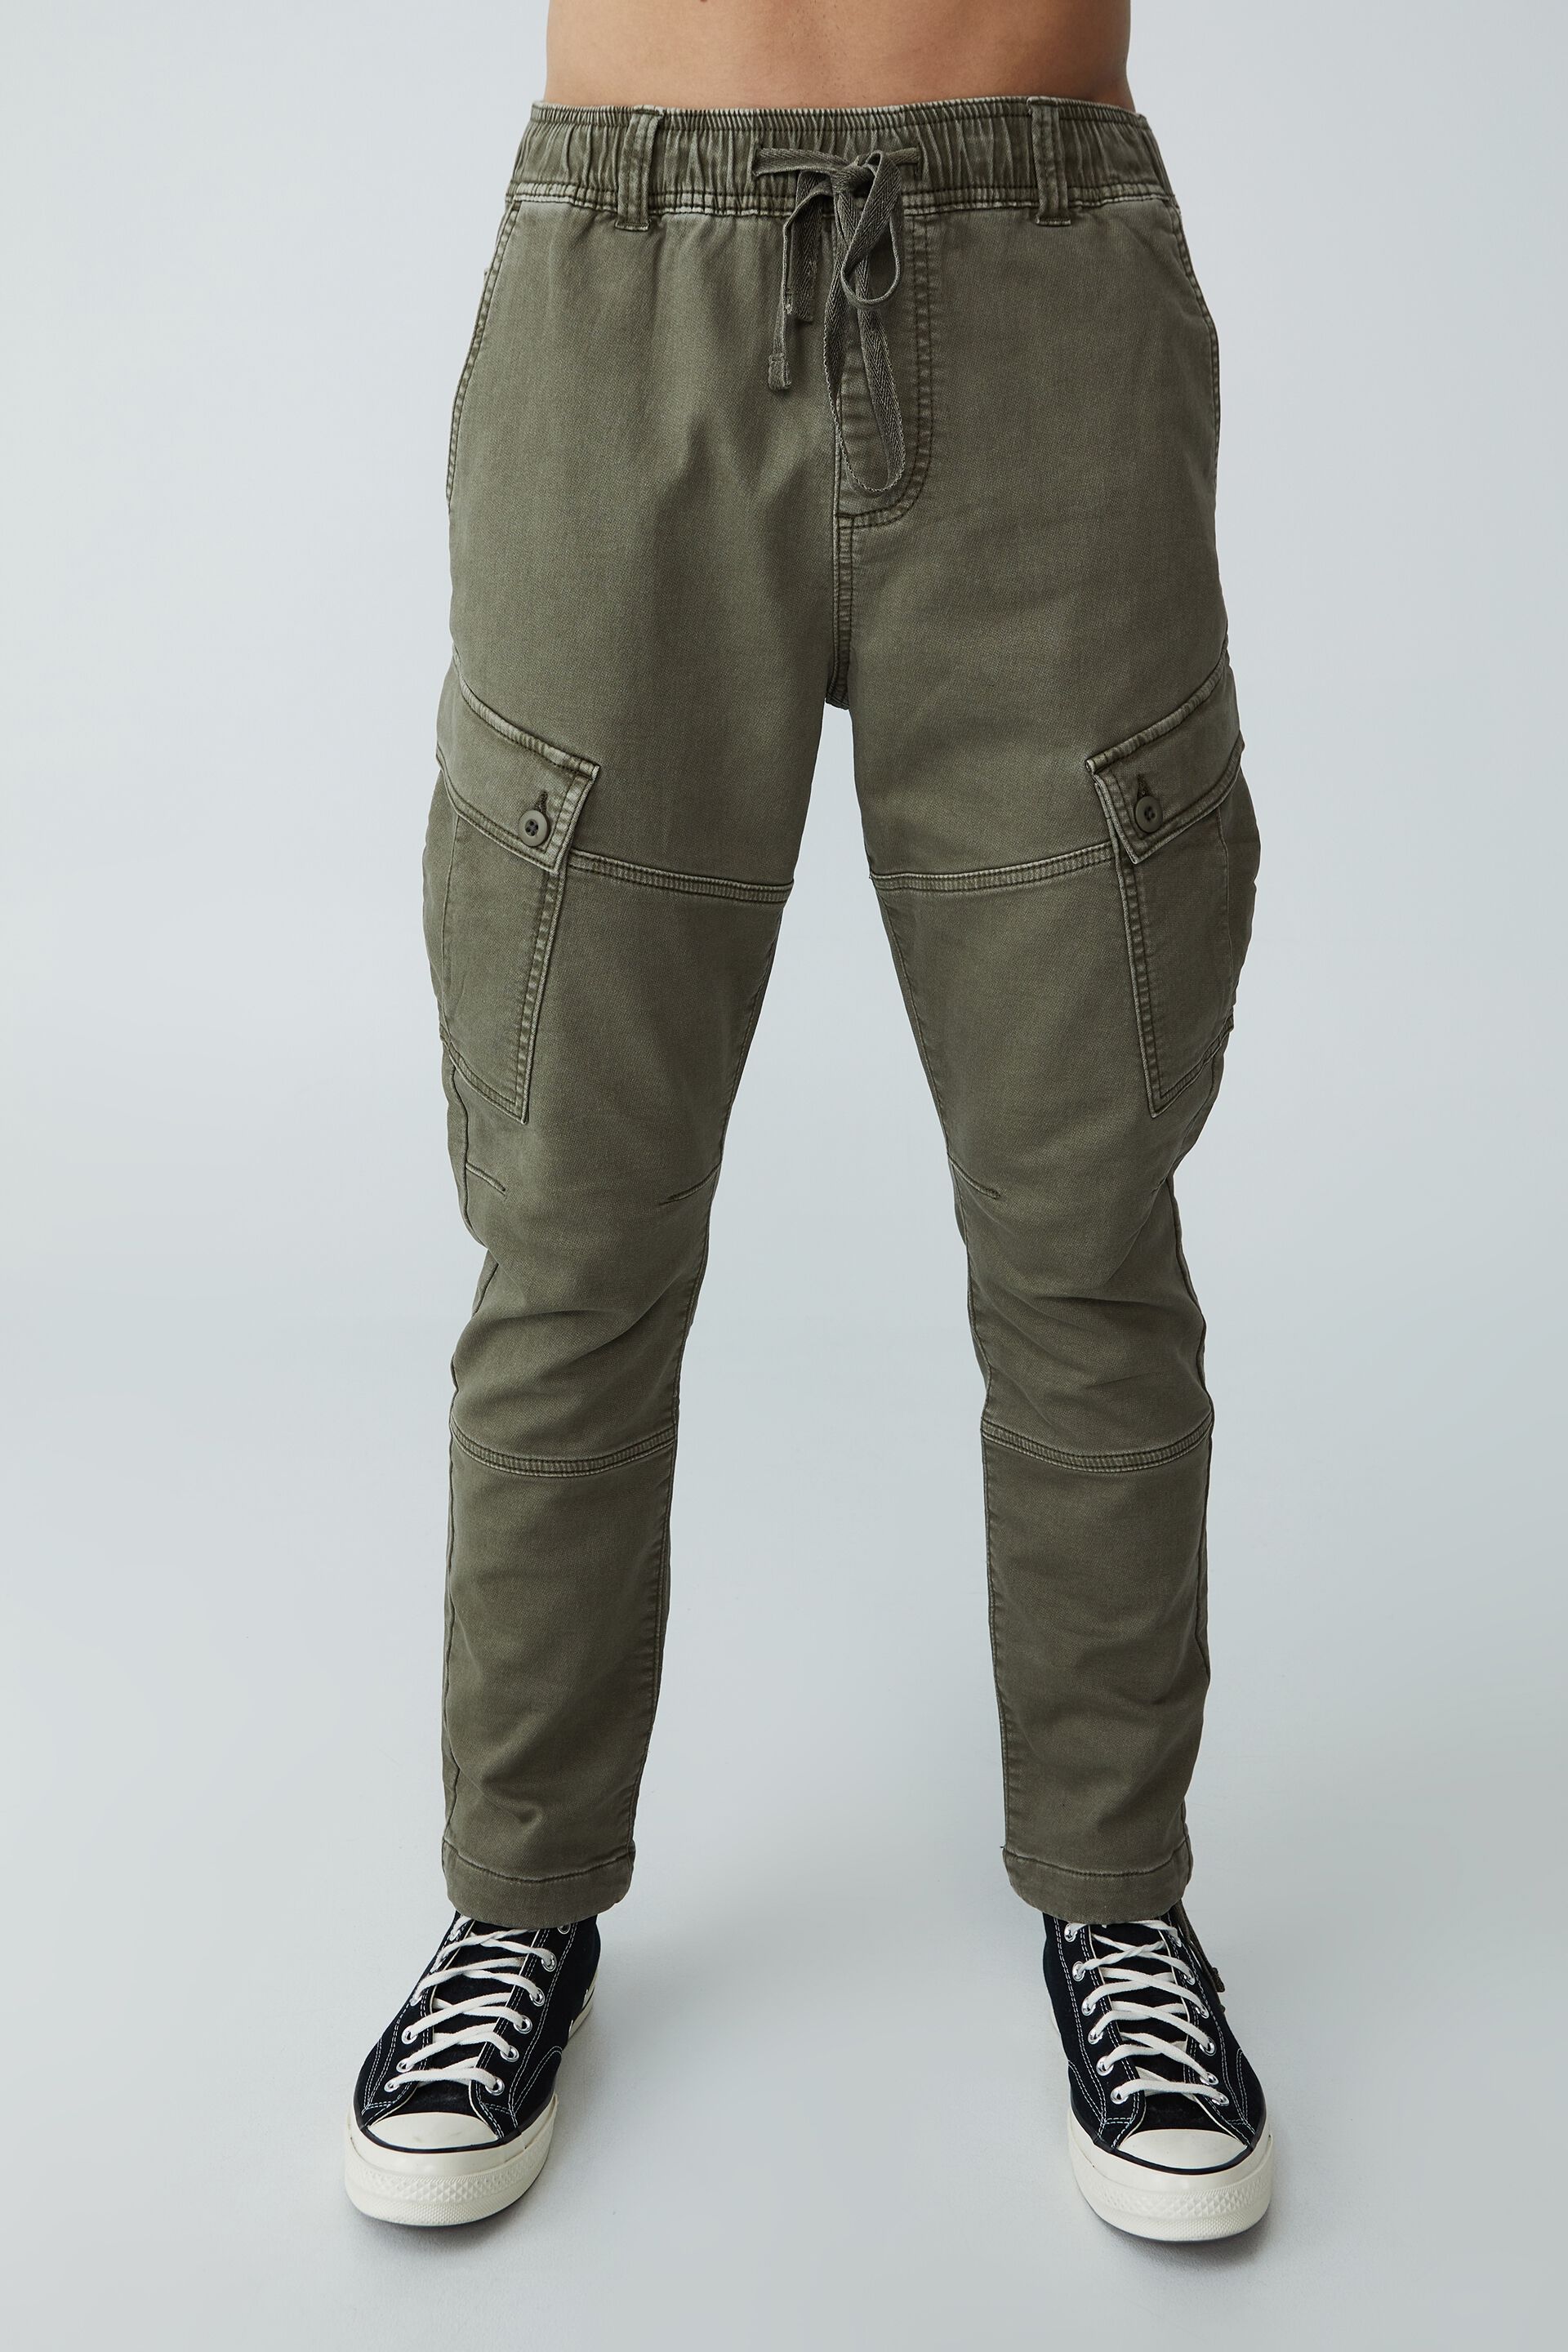 MEN FASHION Trousers Elegant Gray 5XL discount 97% Docayro Chino trouser 